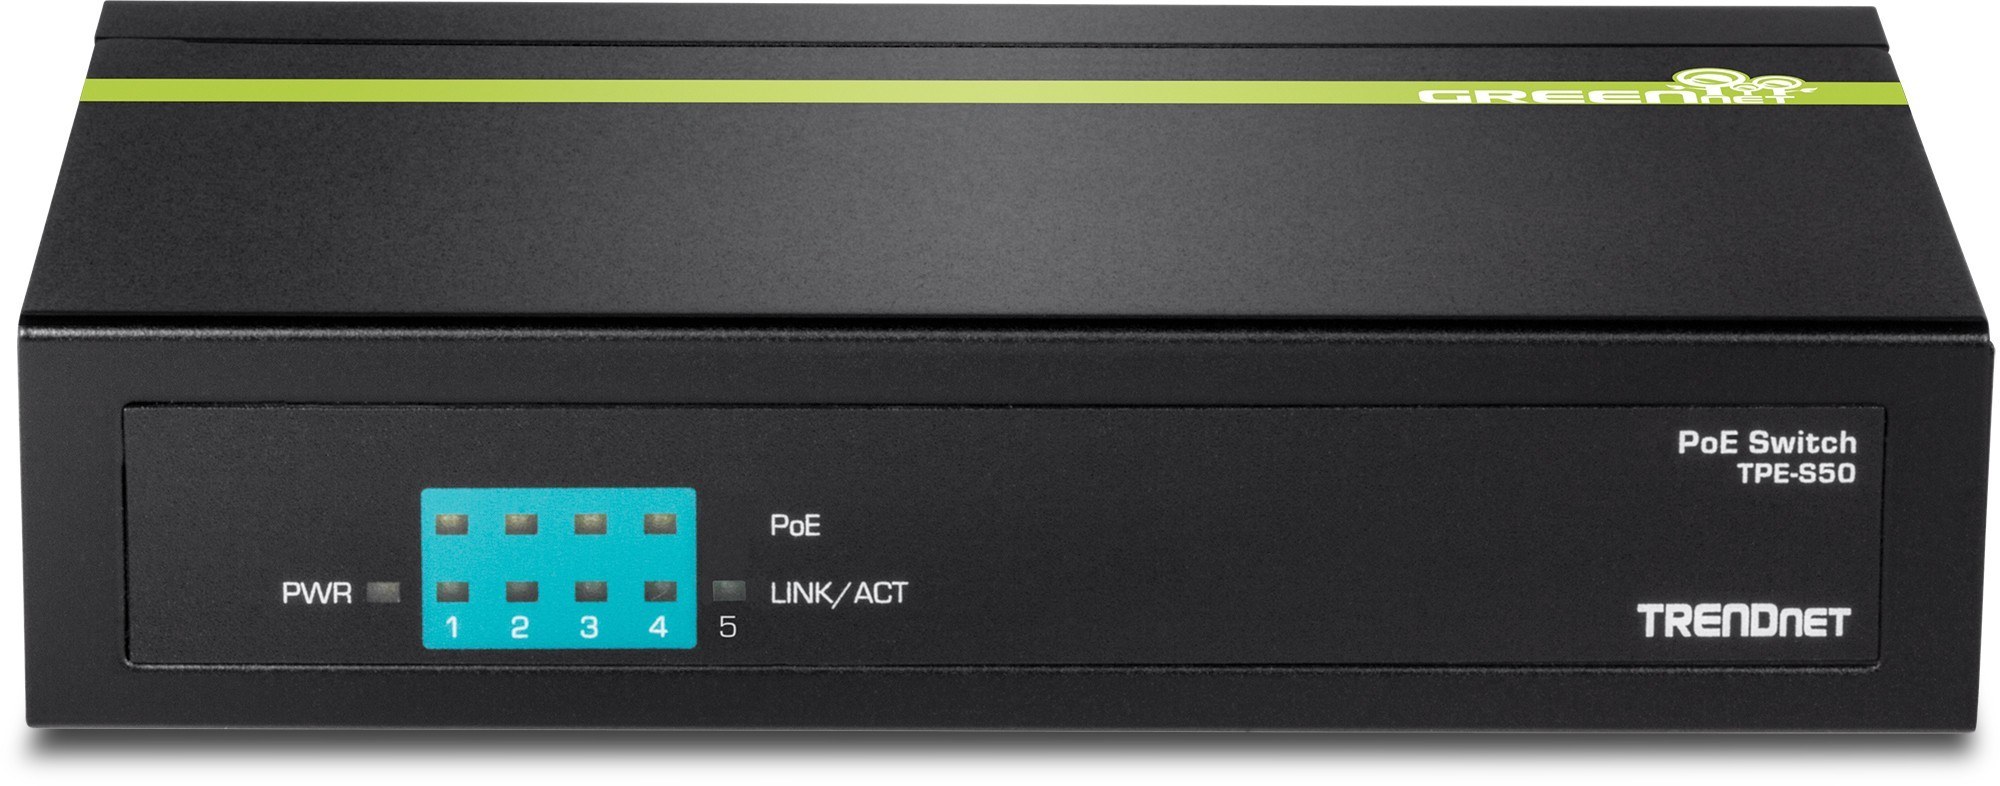 TRENDnet 5-Port 10/100Mbps PoE Switch (31W) TPE-S50